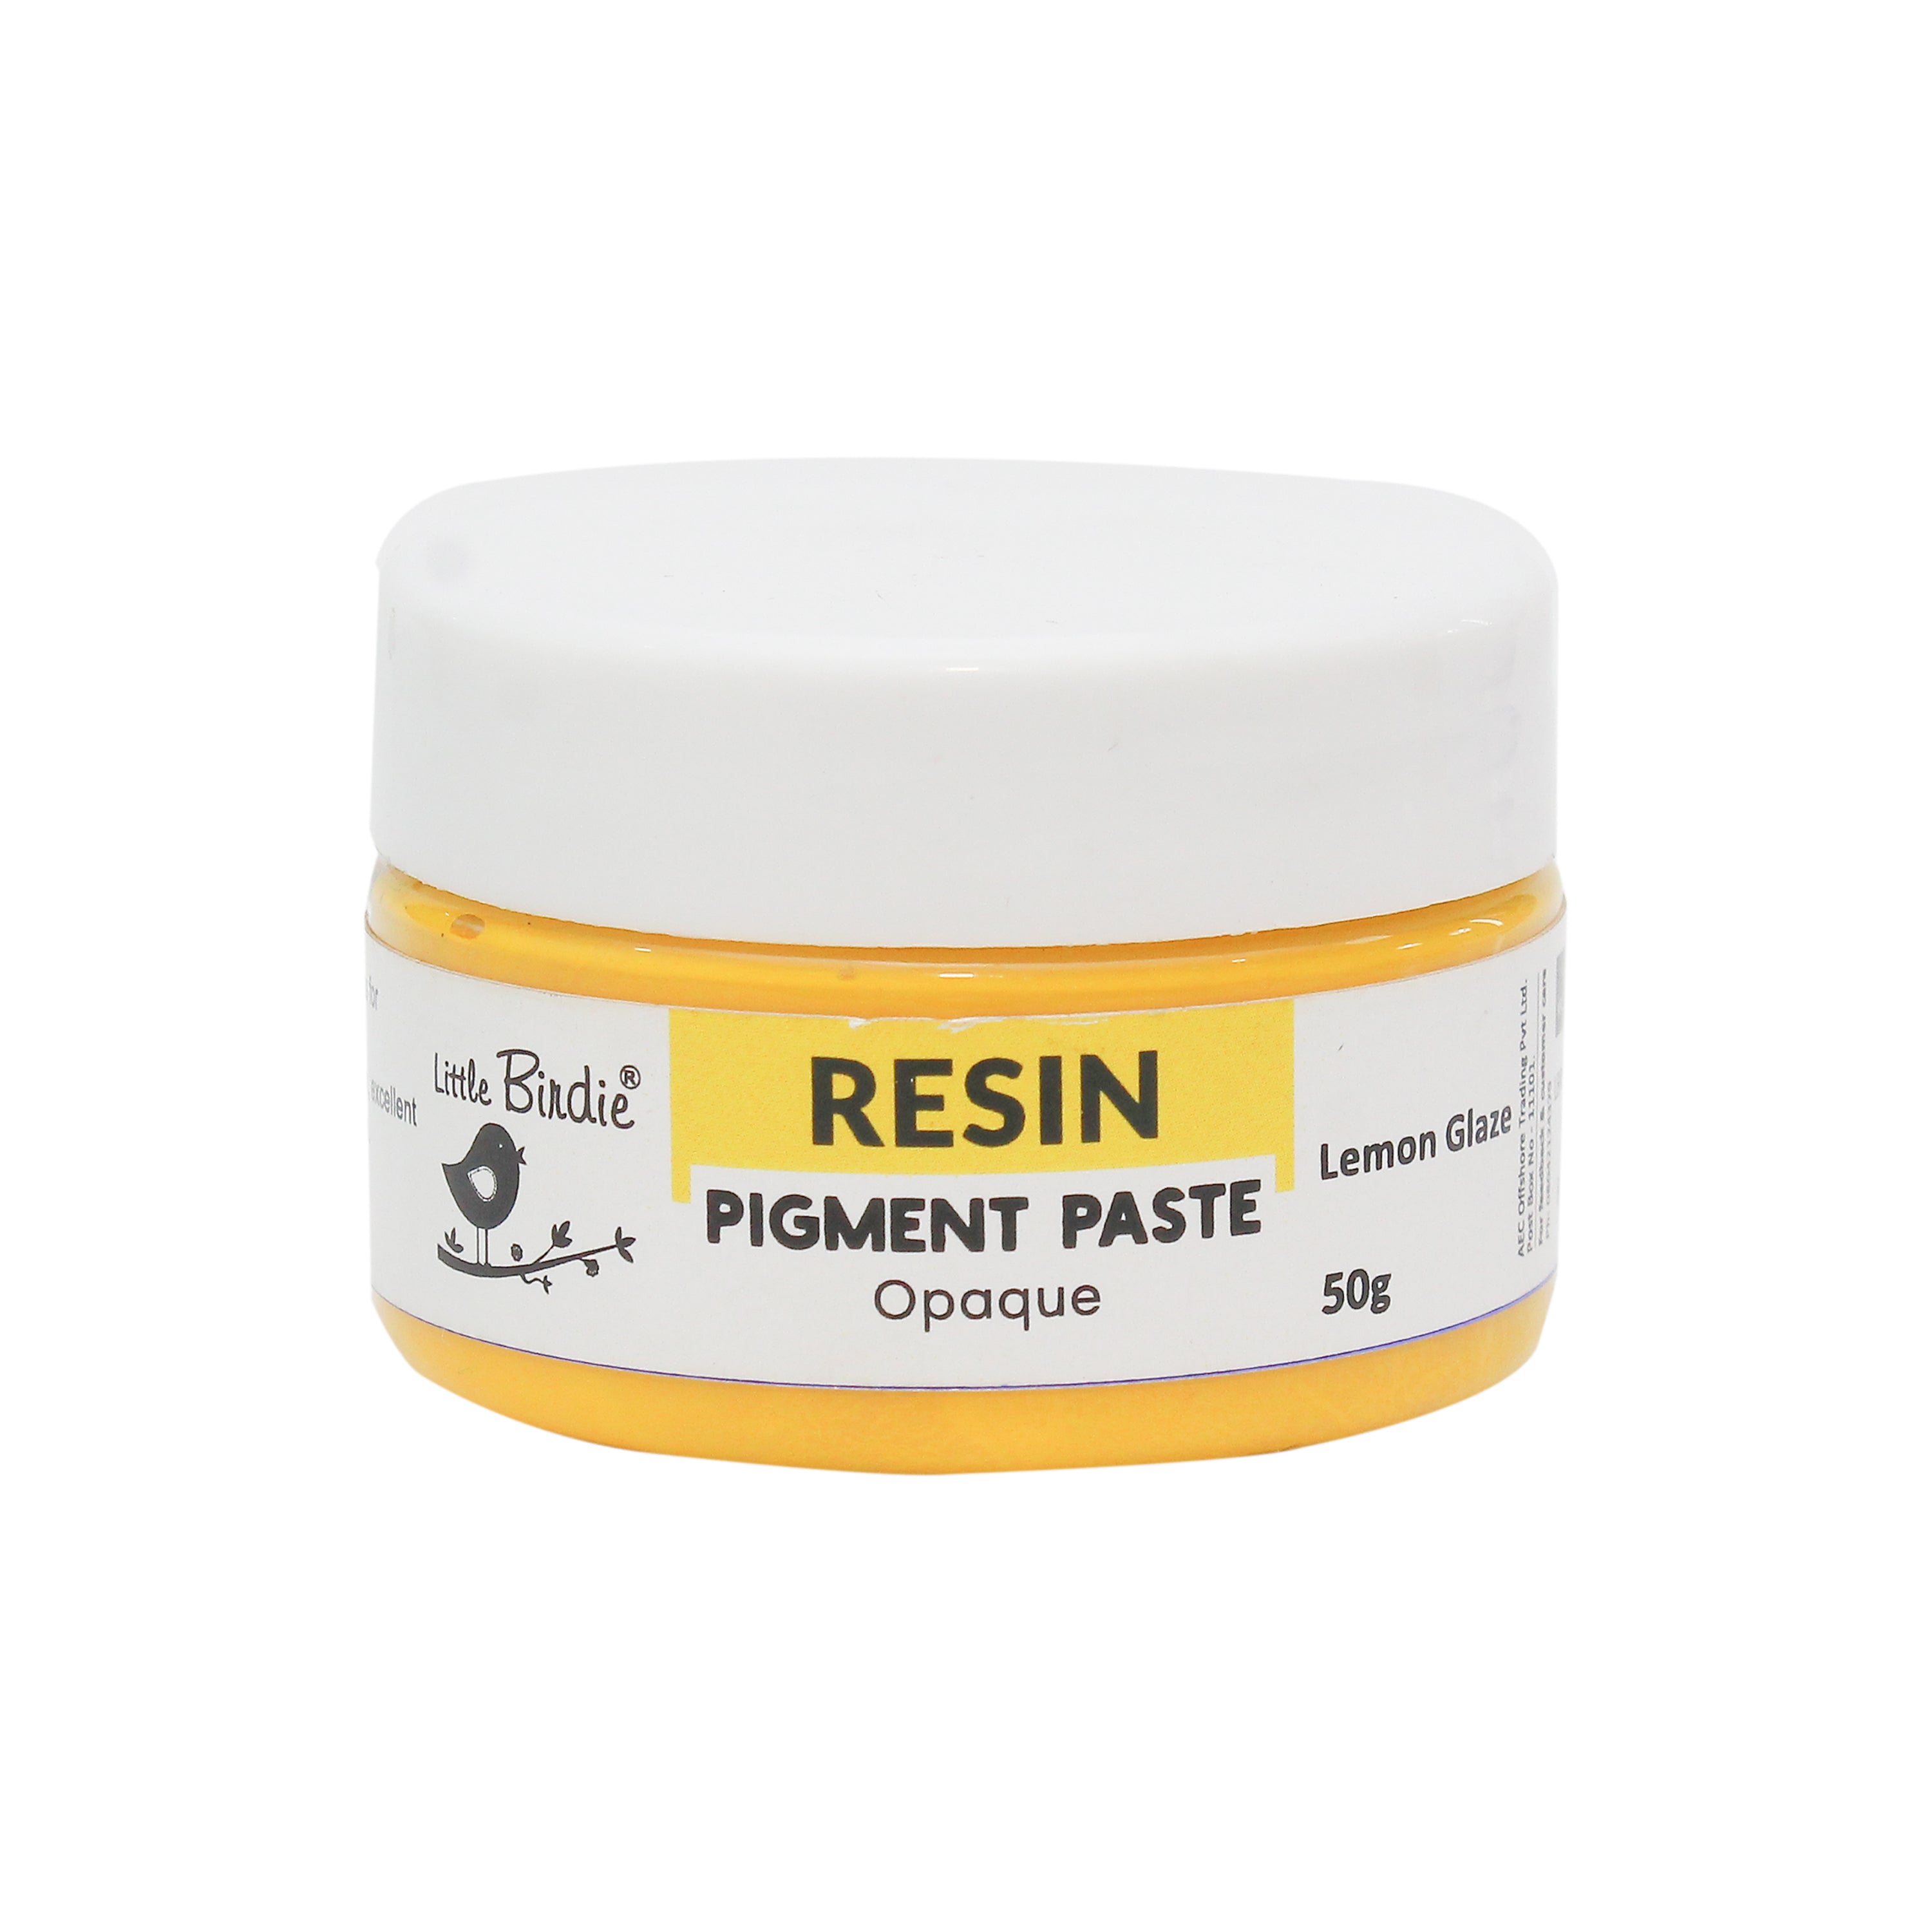 Resin Pigment Opaque Gold 50G Bottle Lb